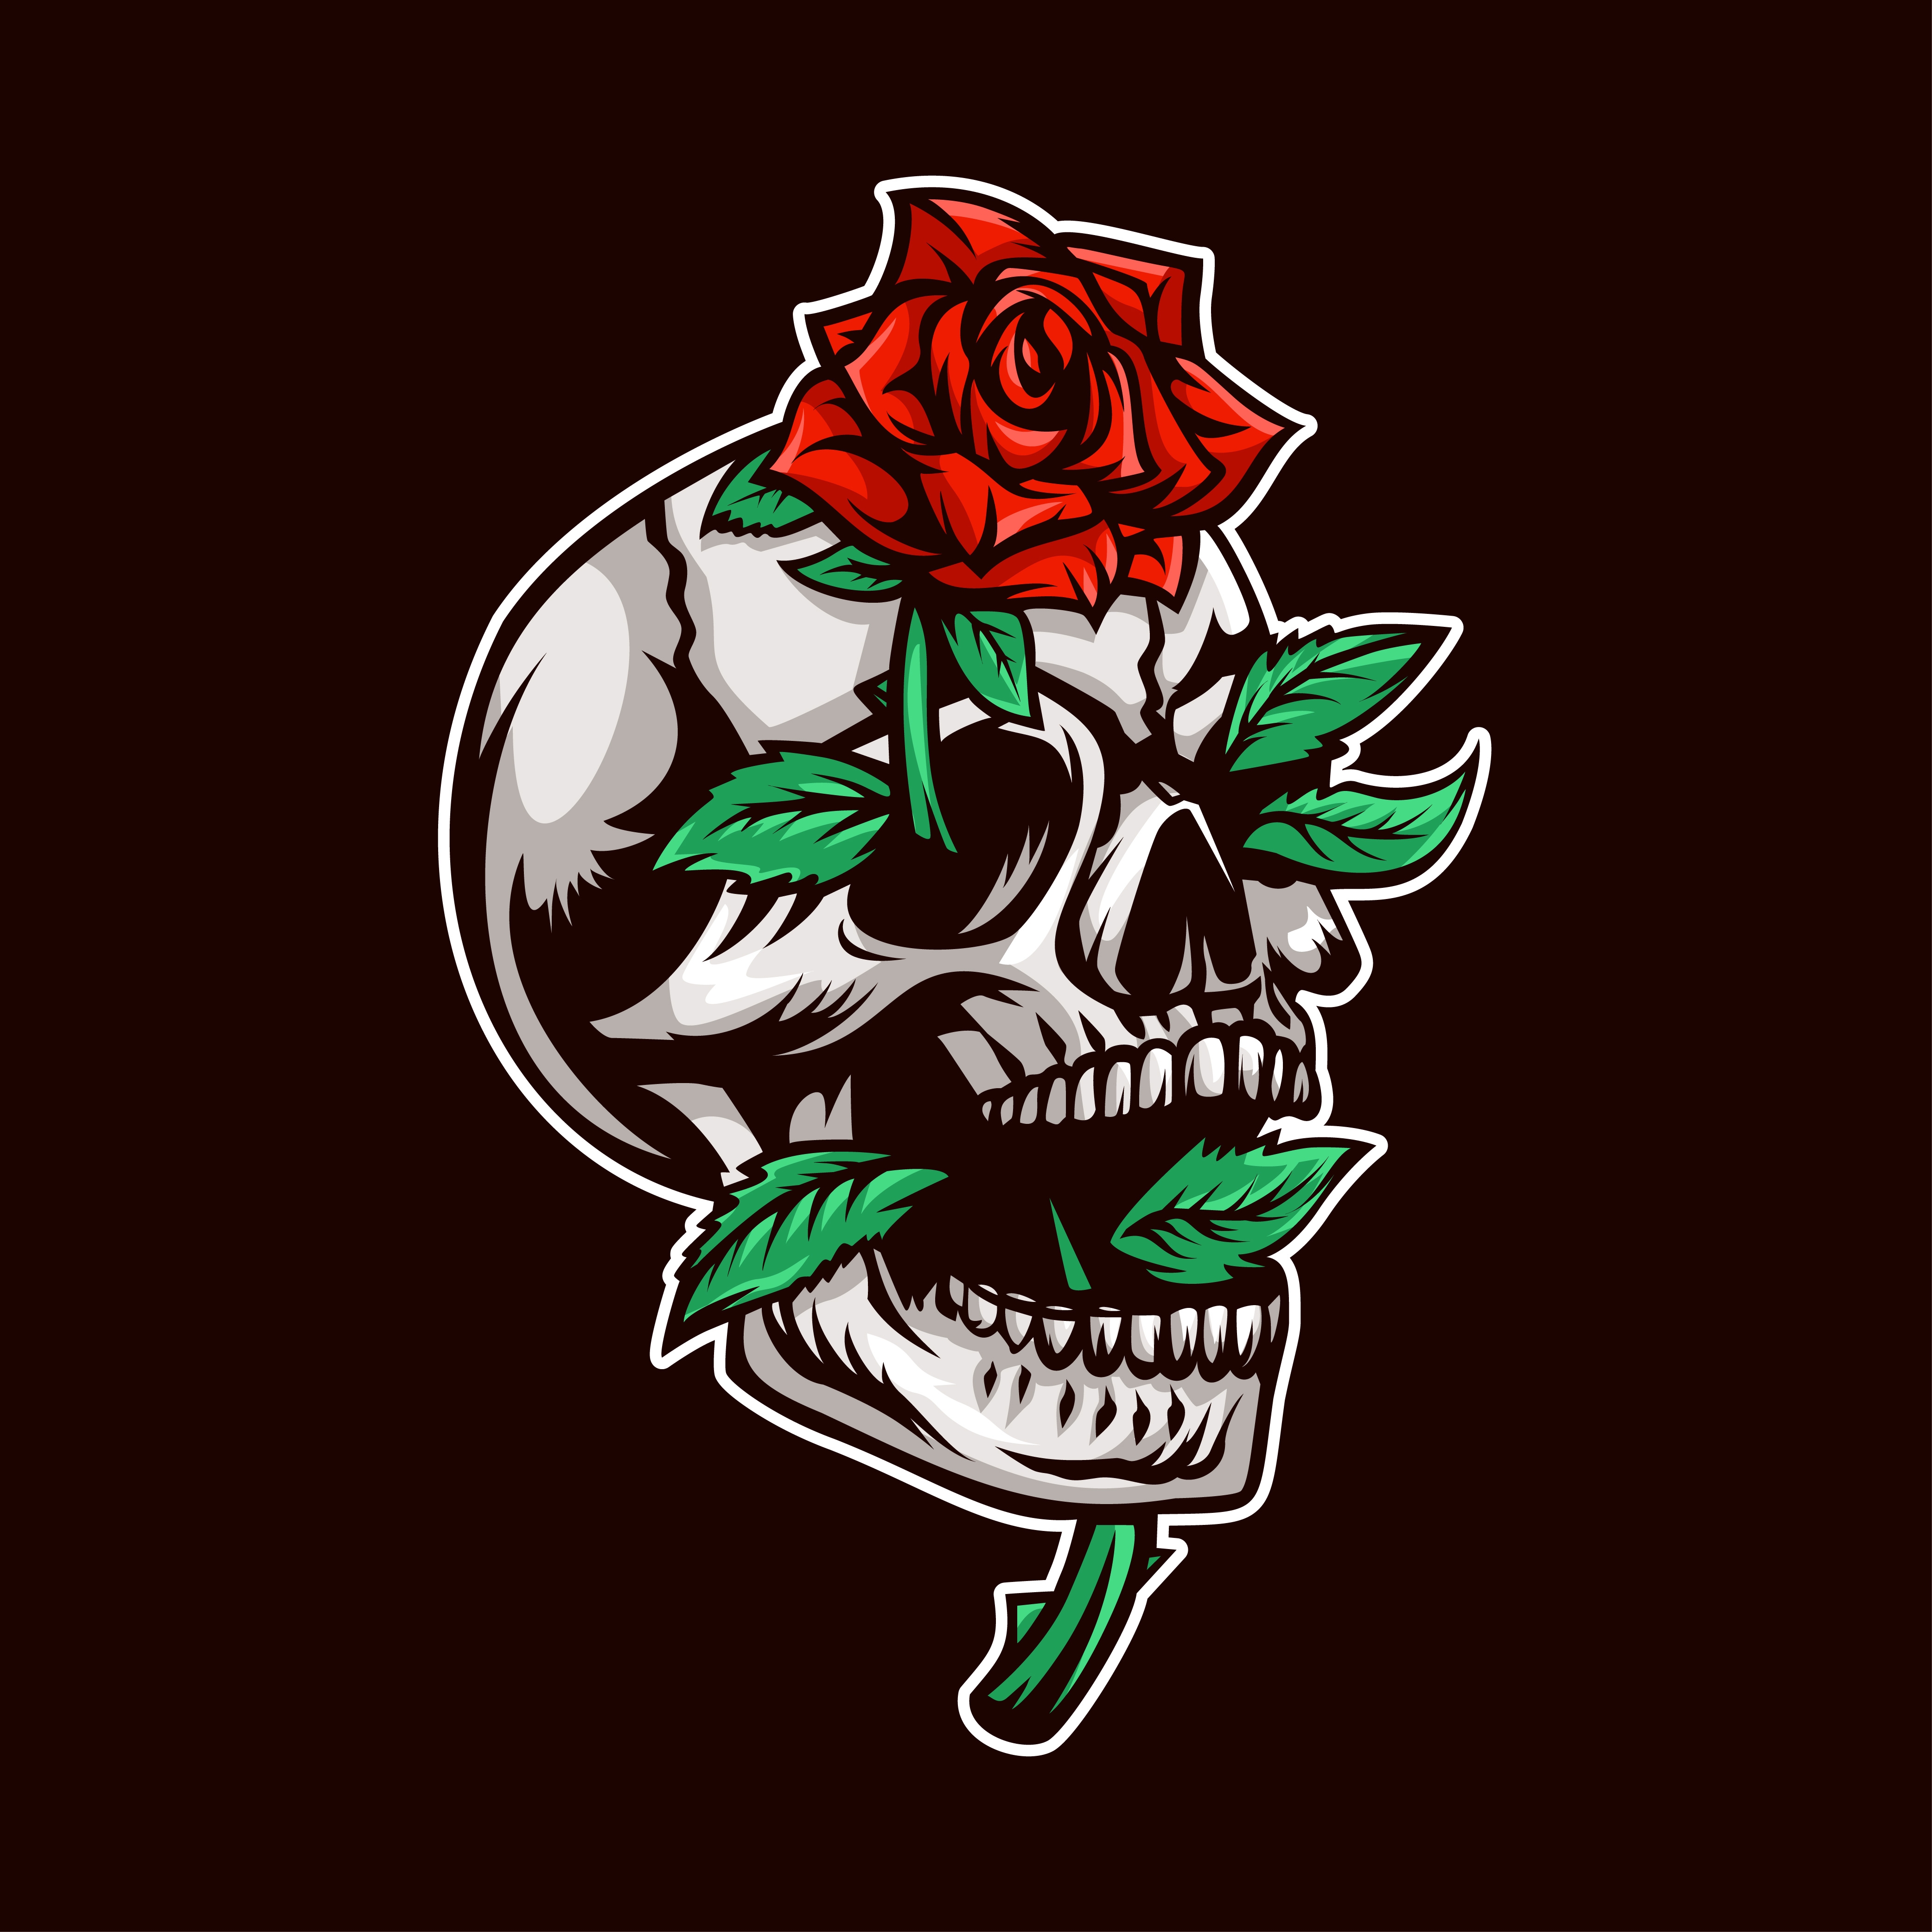 Head Skull with Red Rose Illustration